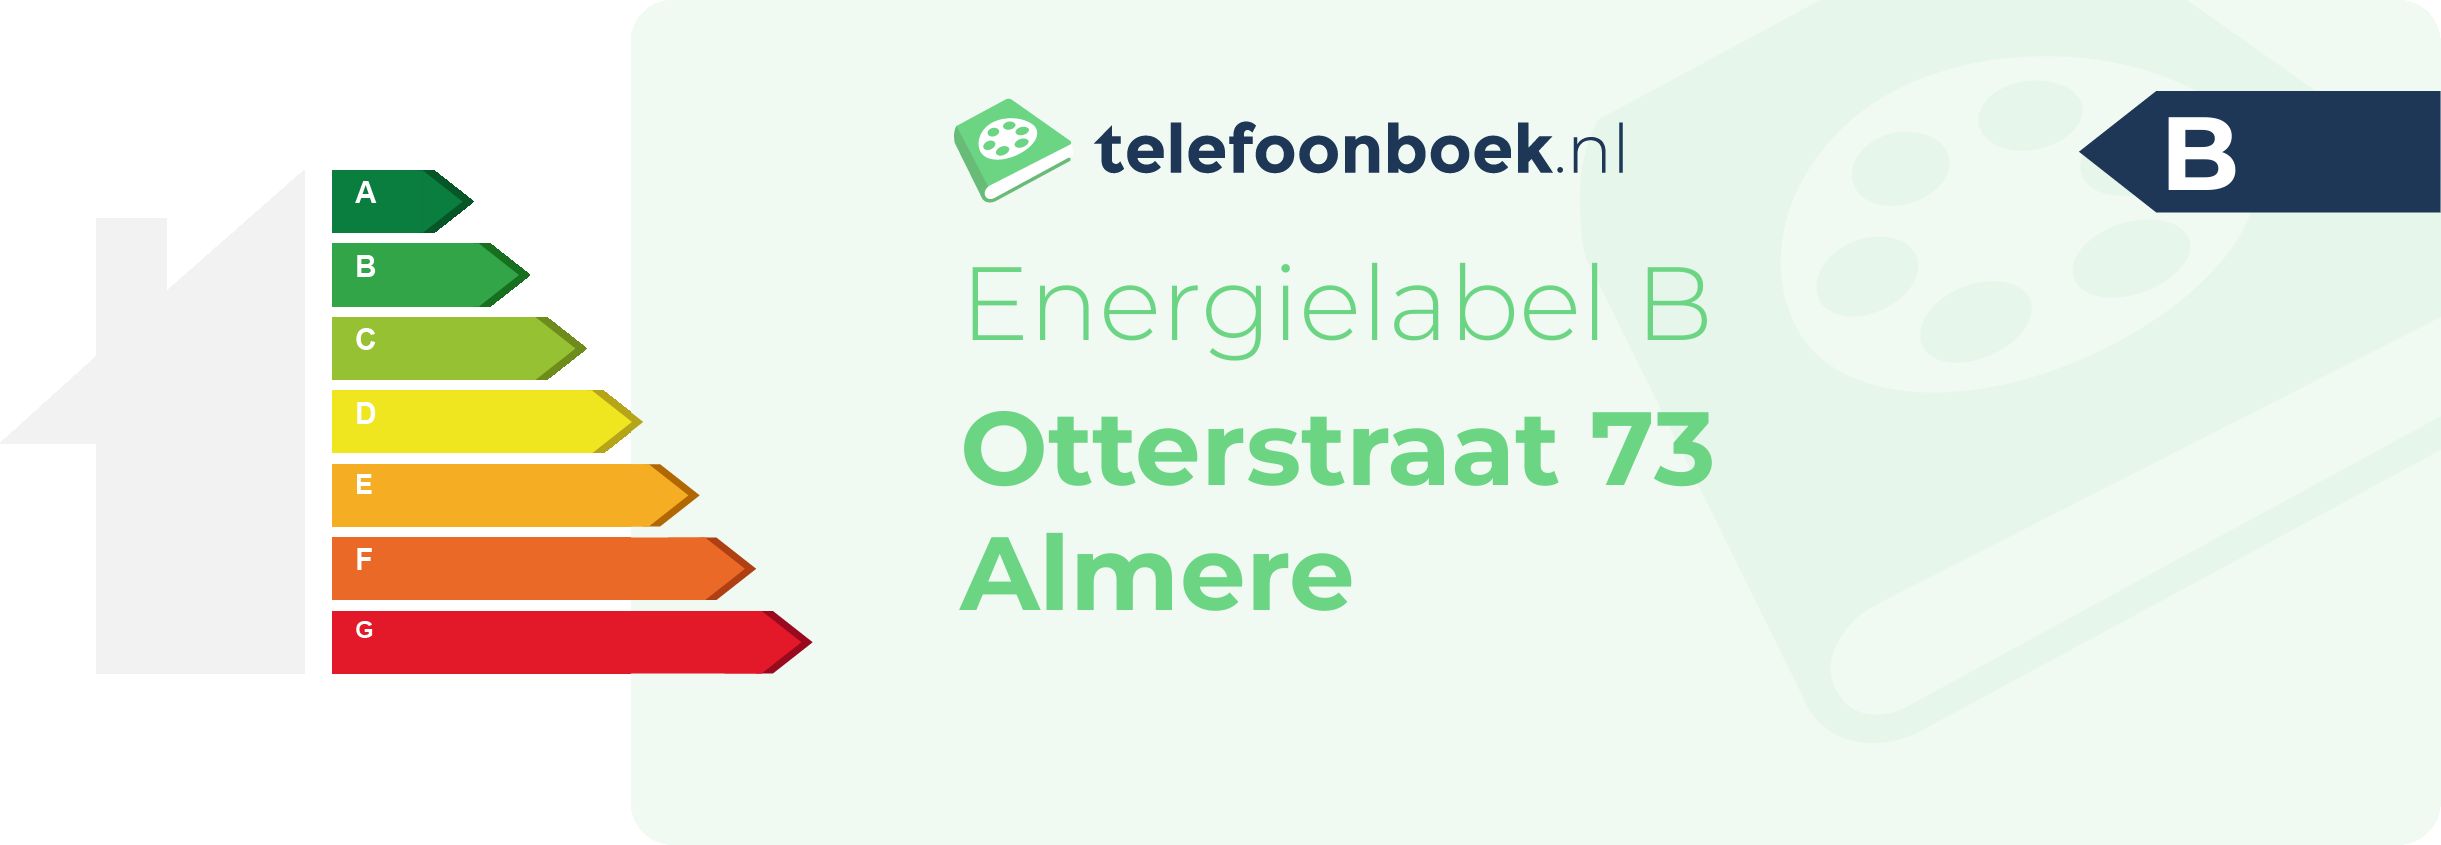 Energielabel Otterstraat 73 Almere